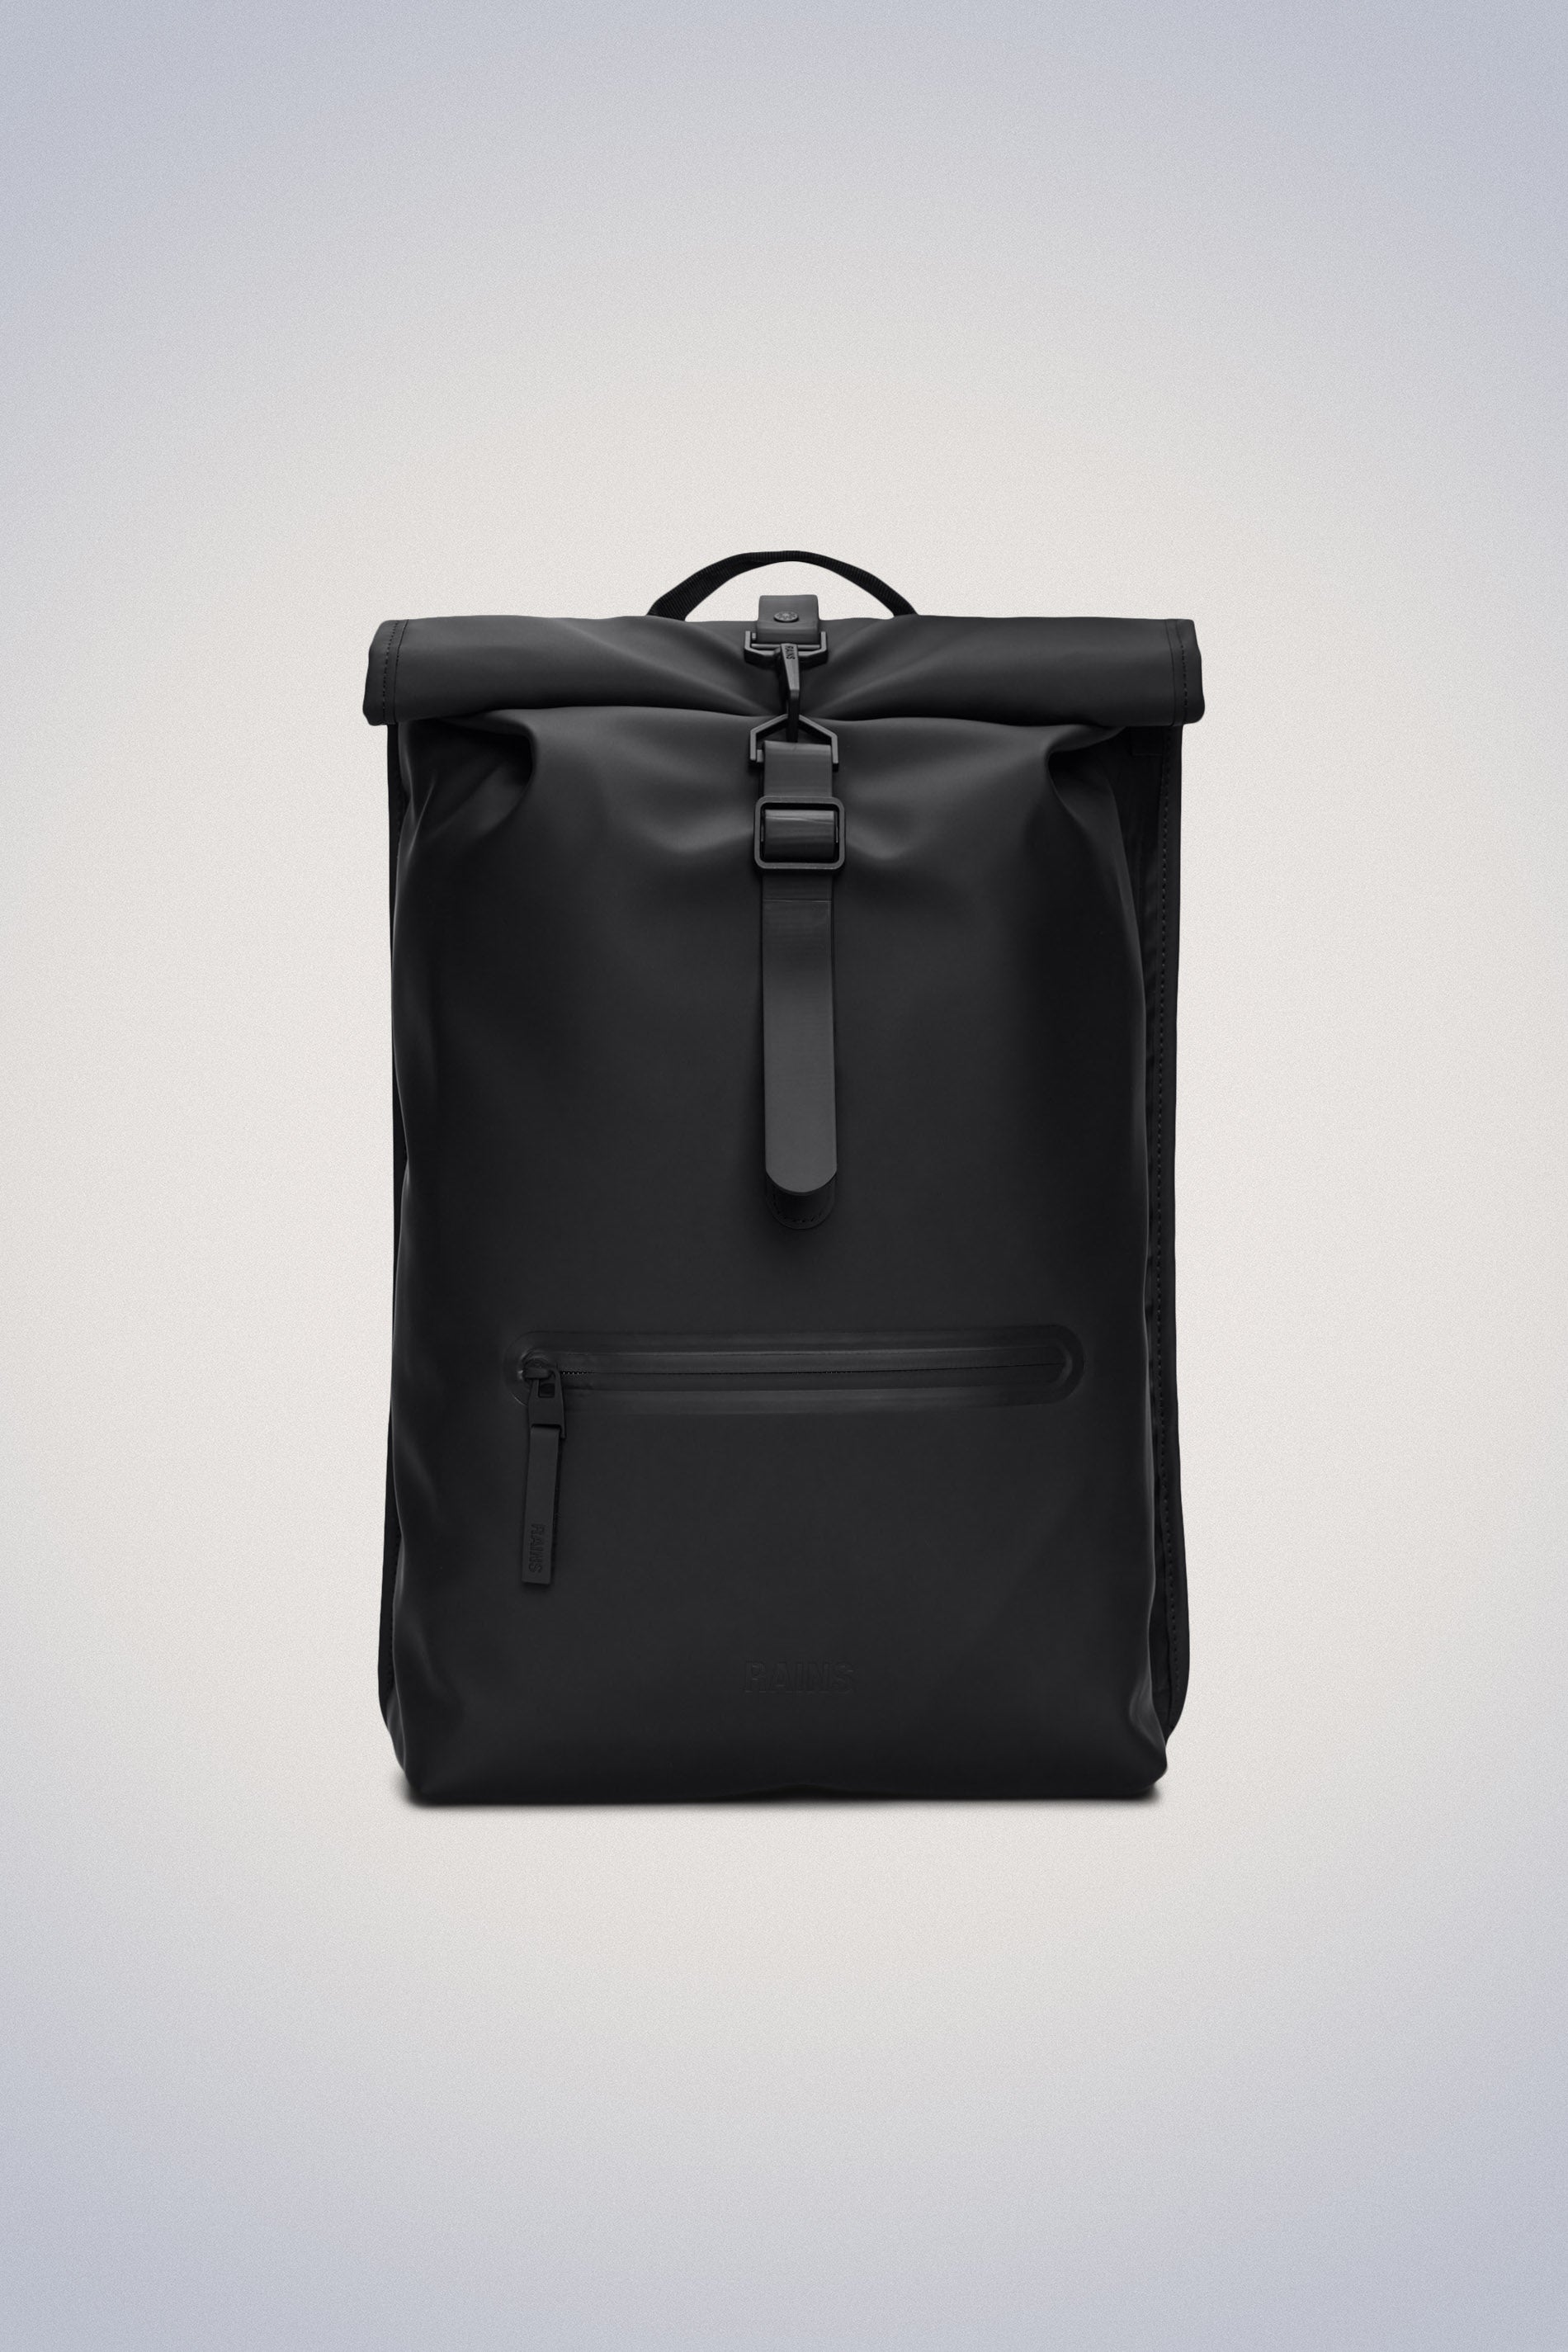 Maisha Tote bags : Buy Maisha Lifestyle Foresty Green Backpack Messenger Bag  Online